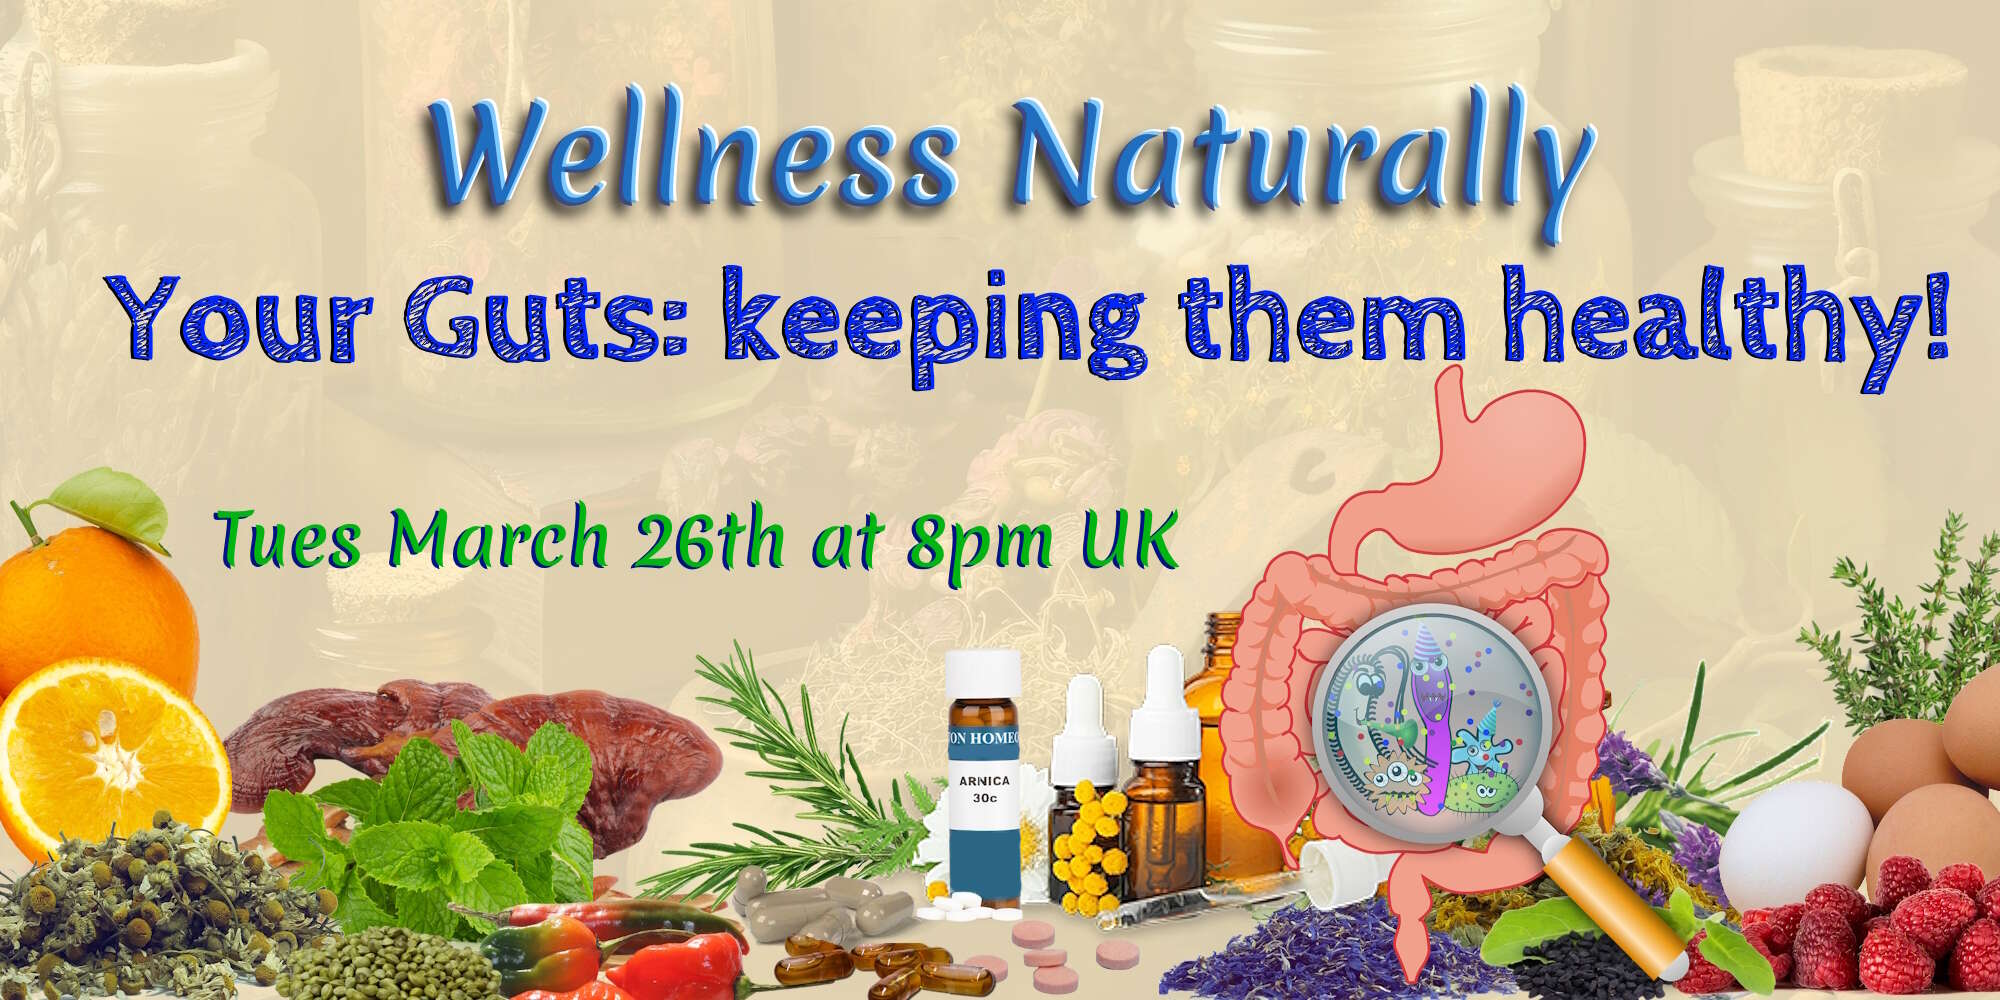 Wellness Naturally: Your Guts!